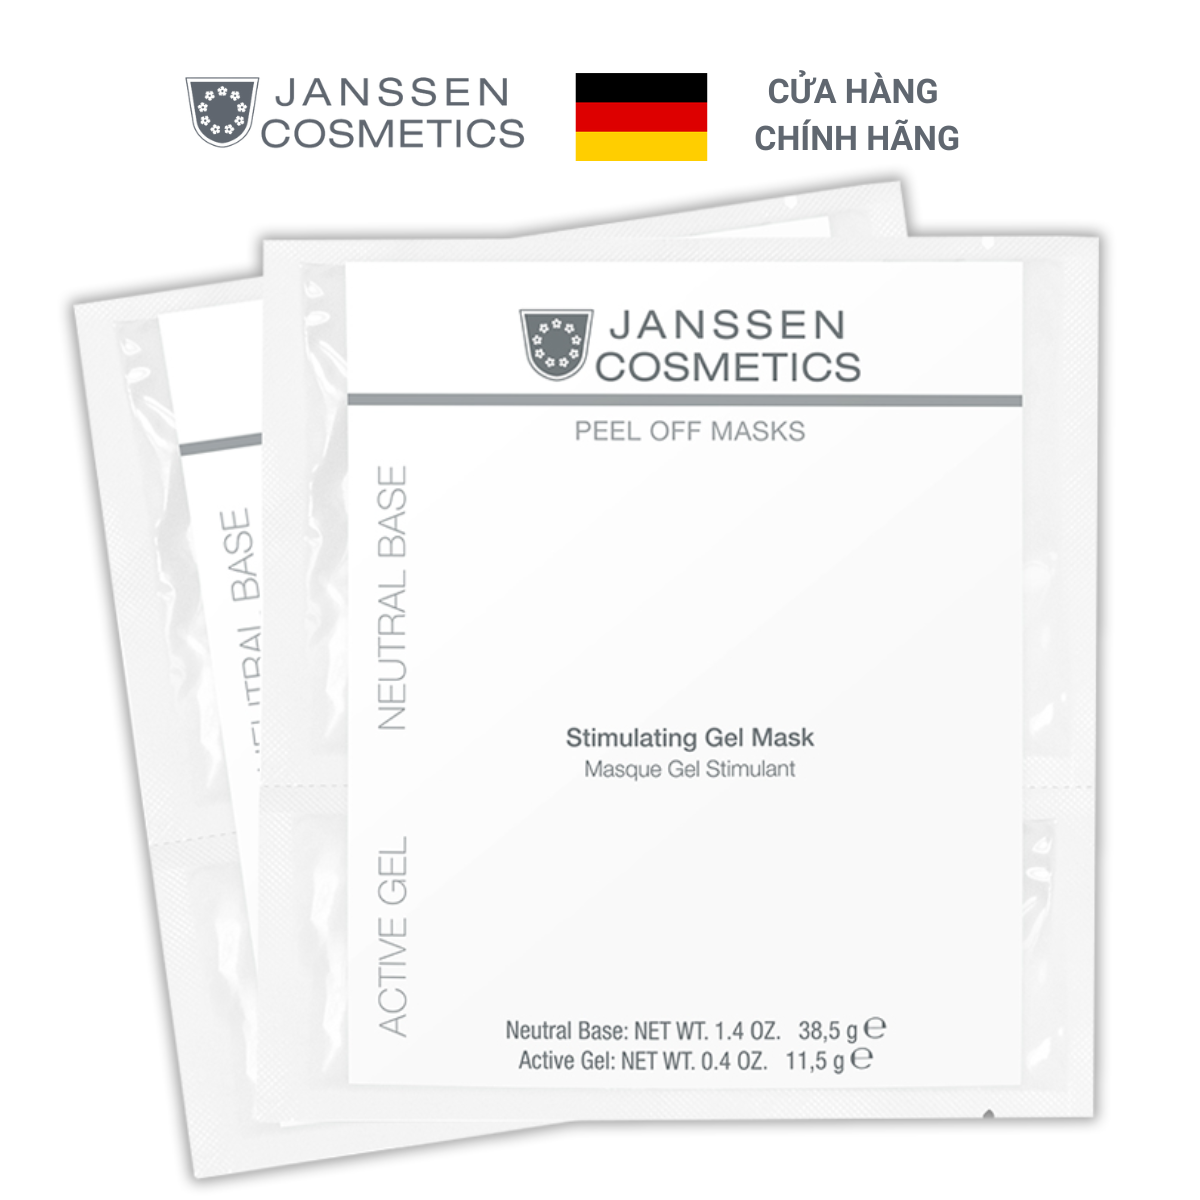  Mặt nạ tái tạo da Janssen Cosmetics Stimulating Gel Mask 5 gói x 50g 